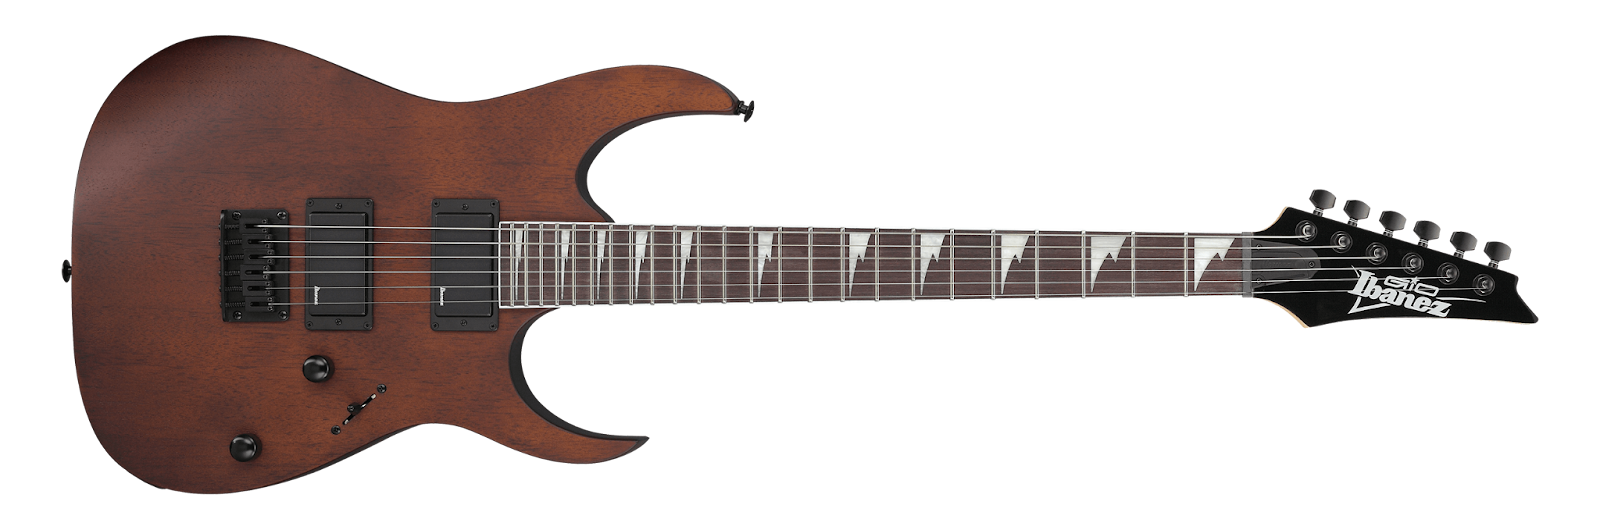 Ibanez Gio GRG121DX electric guitar under $300/£300.